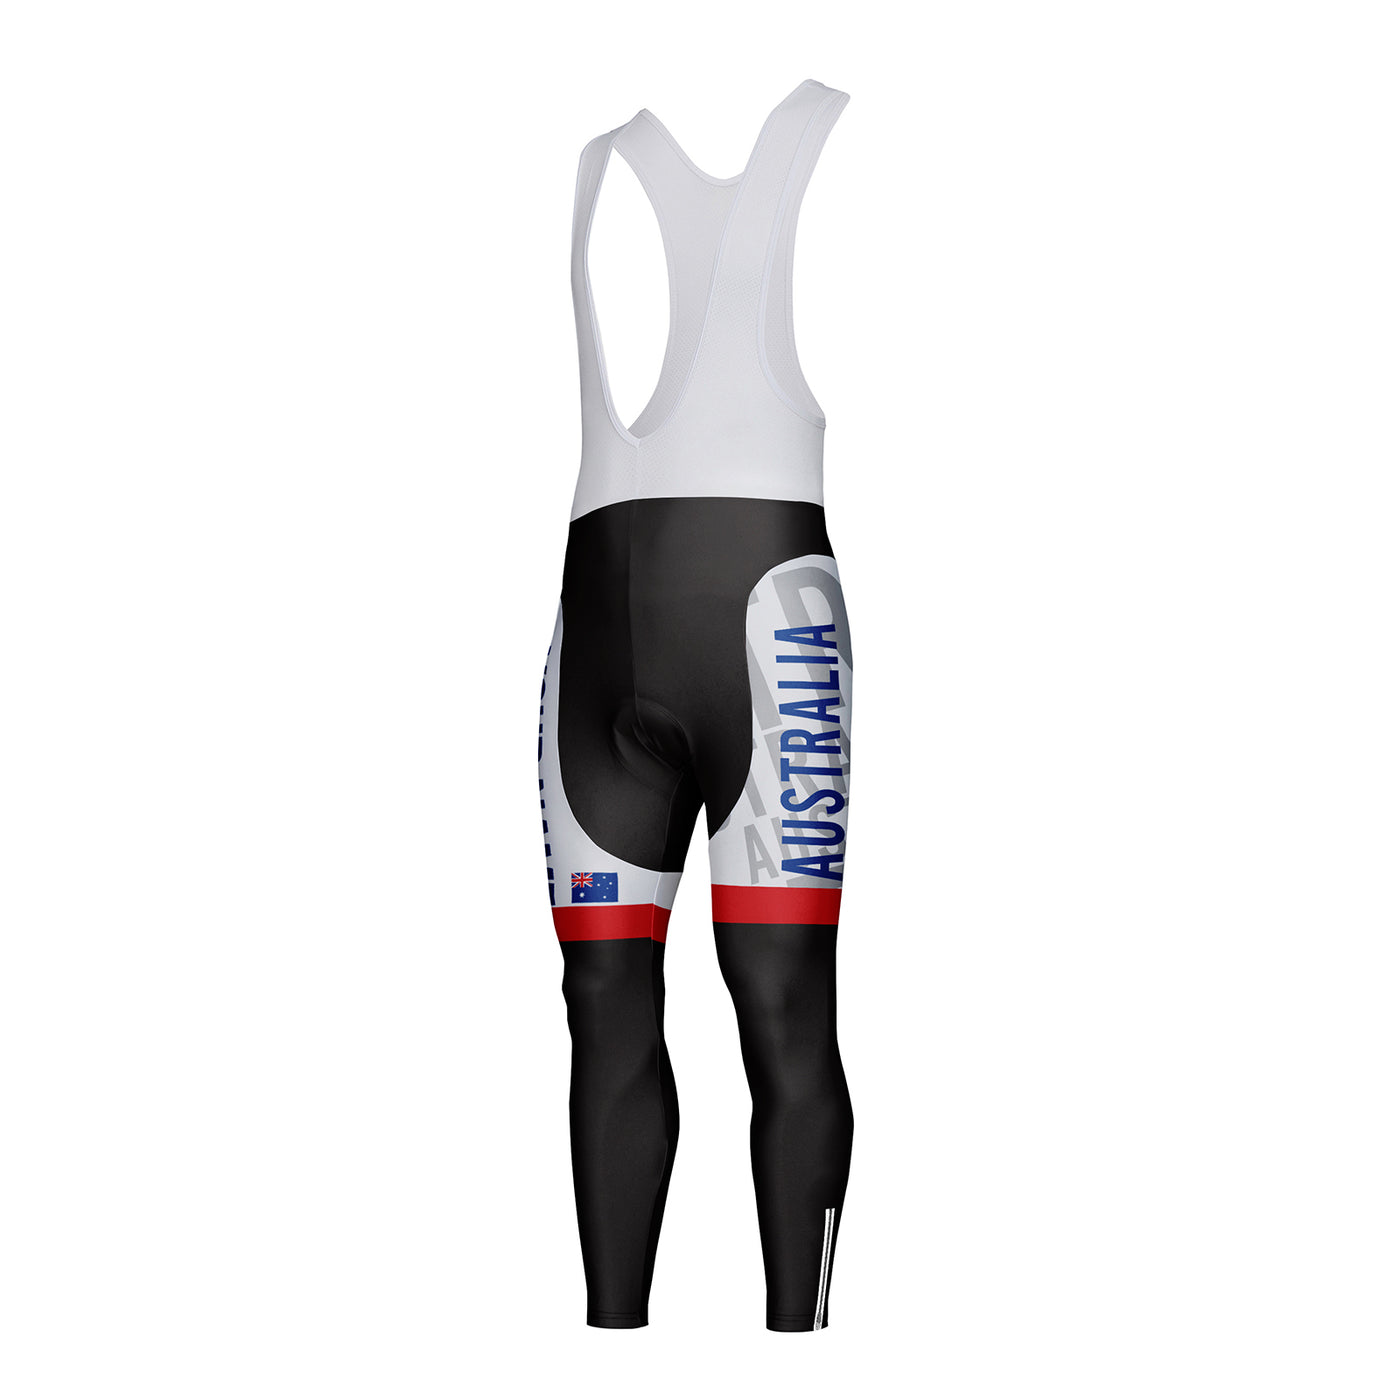 Customized Australia Unisex Cycling Bib Tights Long Pants